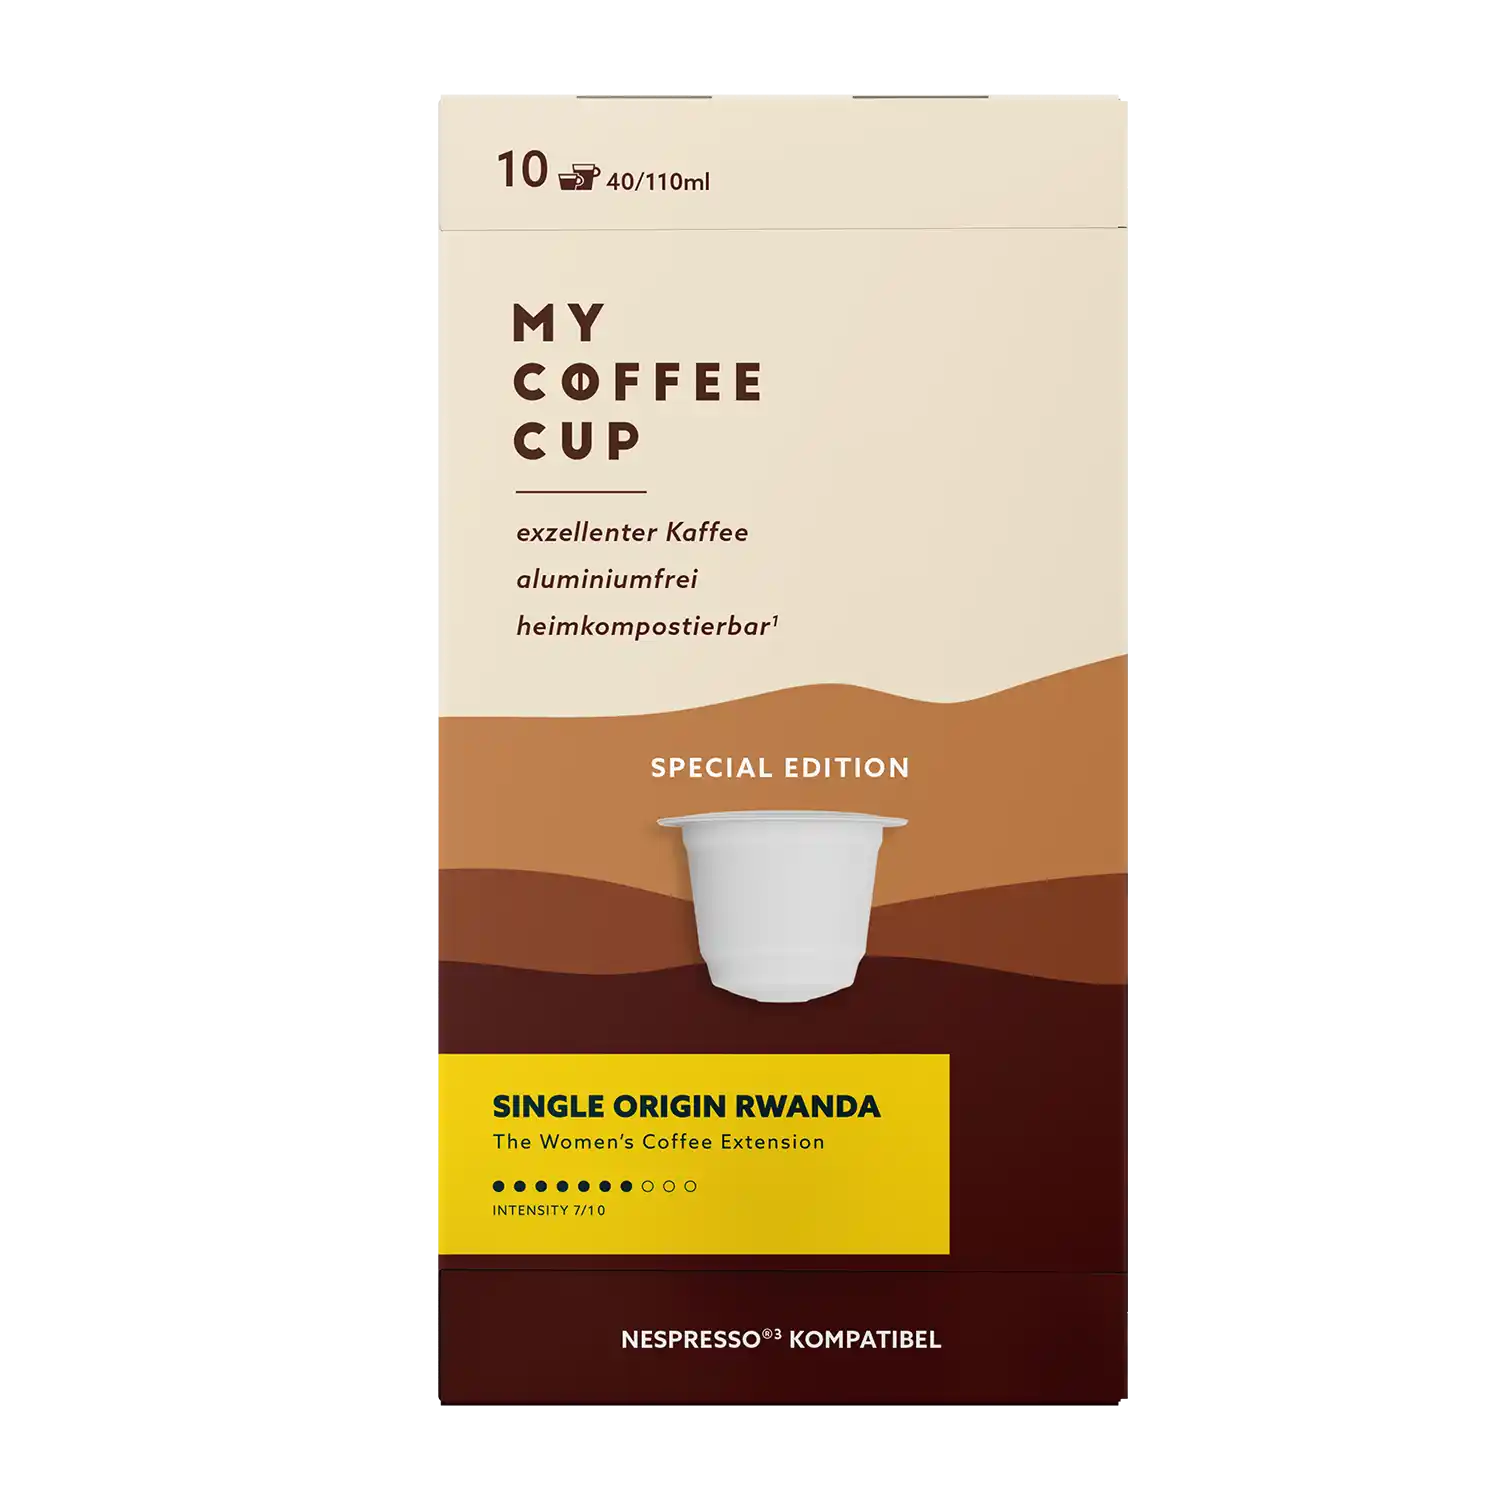 Nespresso kompatible Kapseln - single origin rwanda - MyCoffeeCup.de